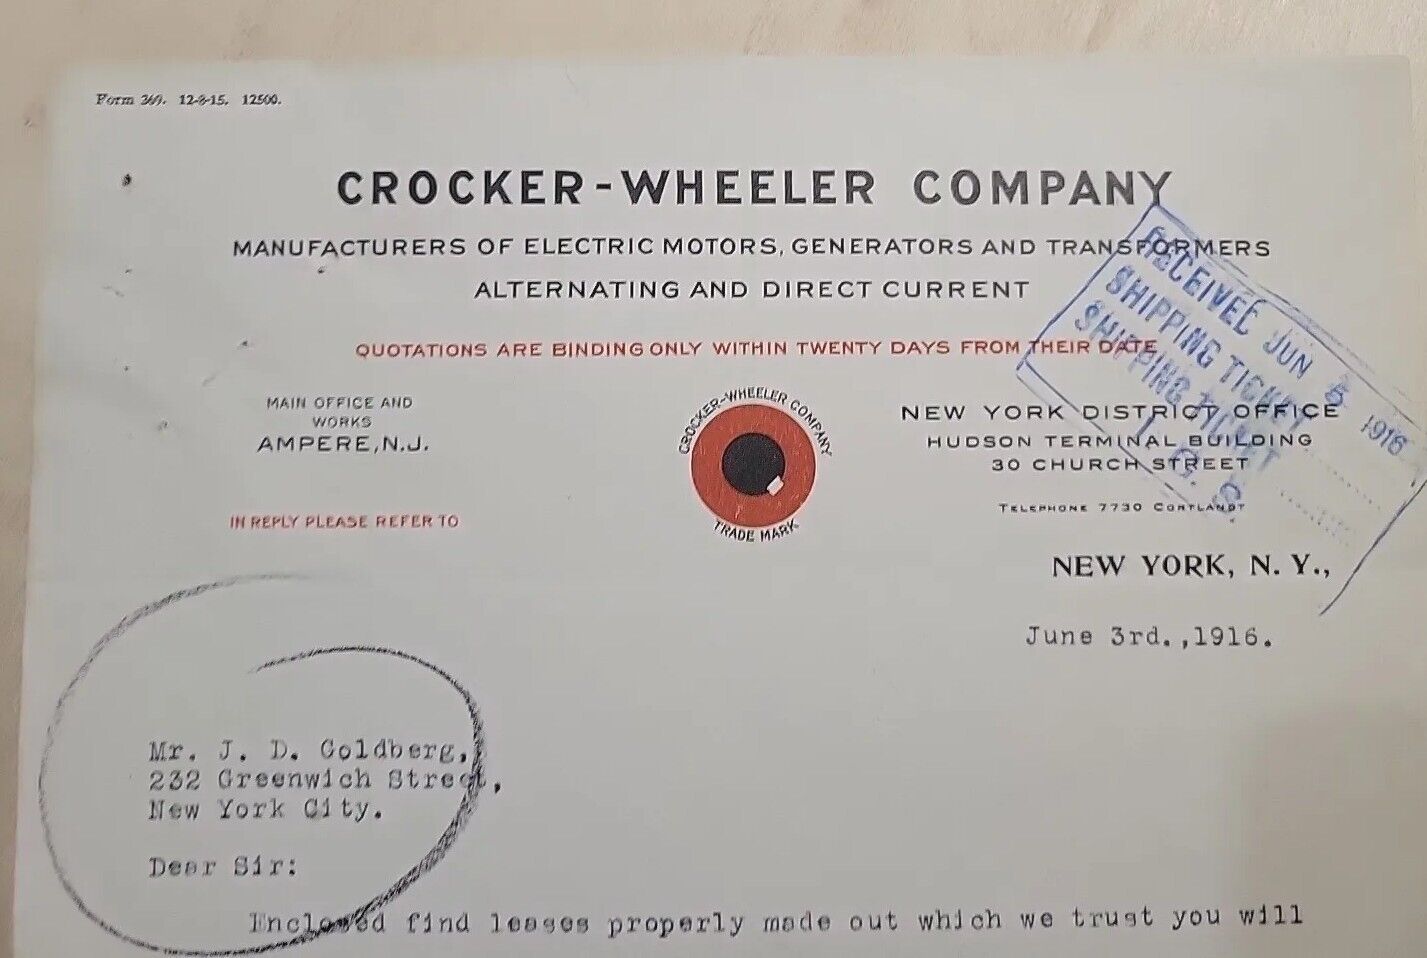 19l6 Antique Document, Crocker-Wheeler Company, New York, N.Y. Signed